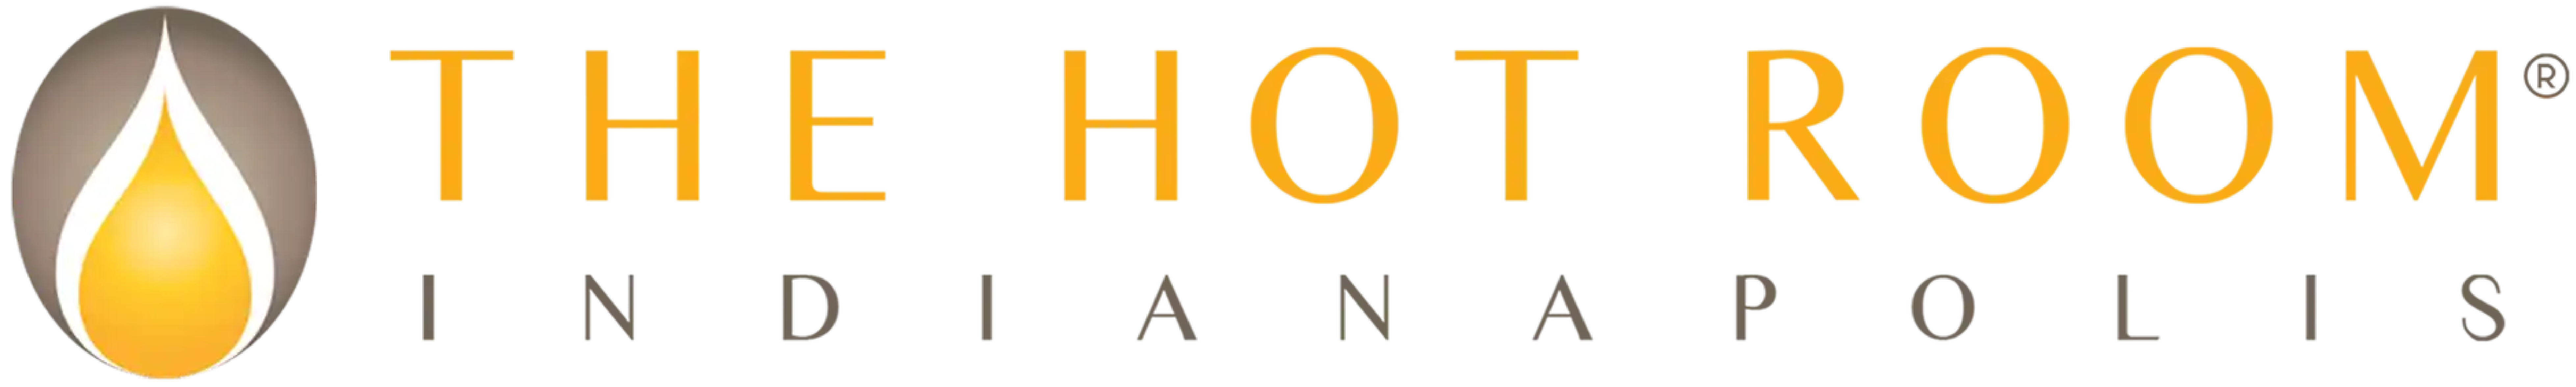 thehotroom-logo